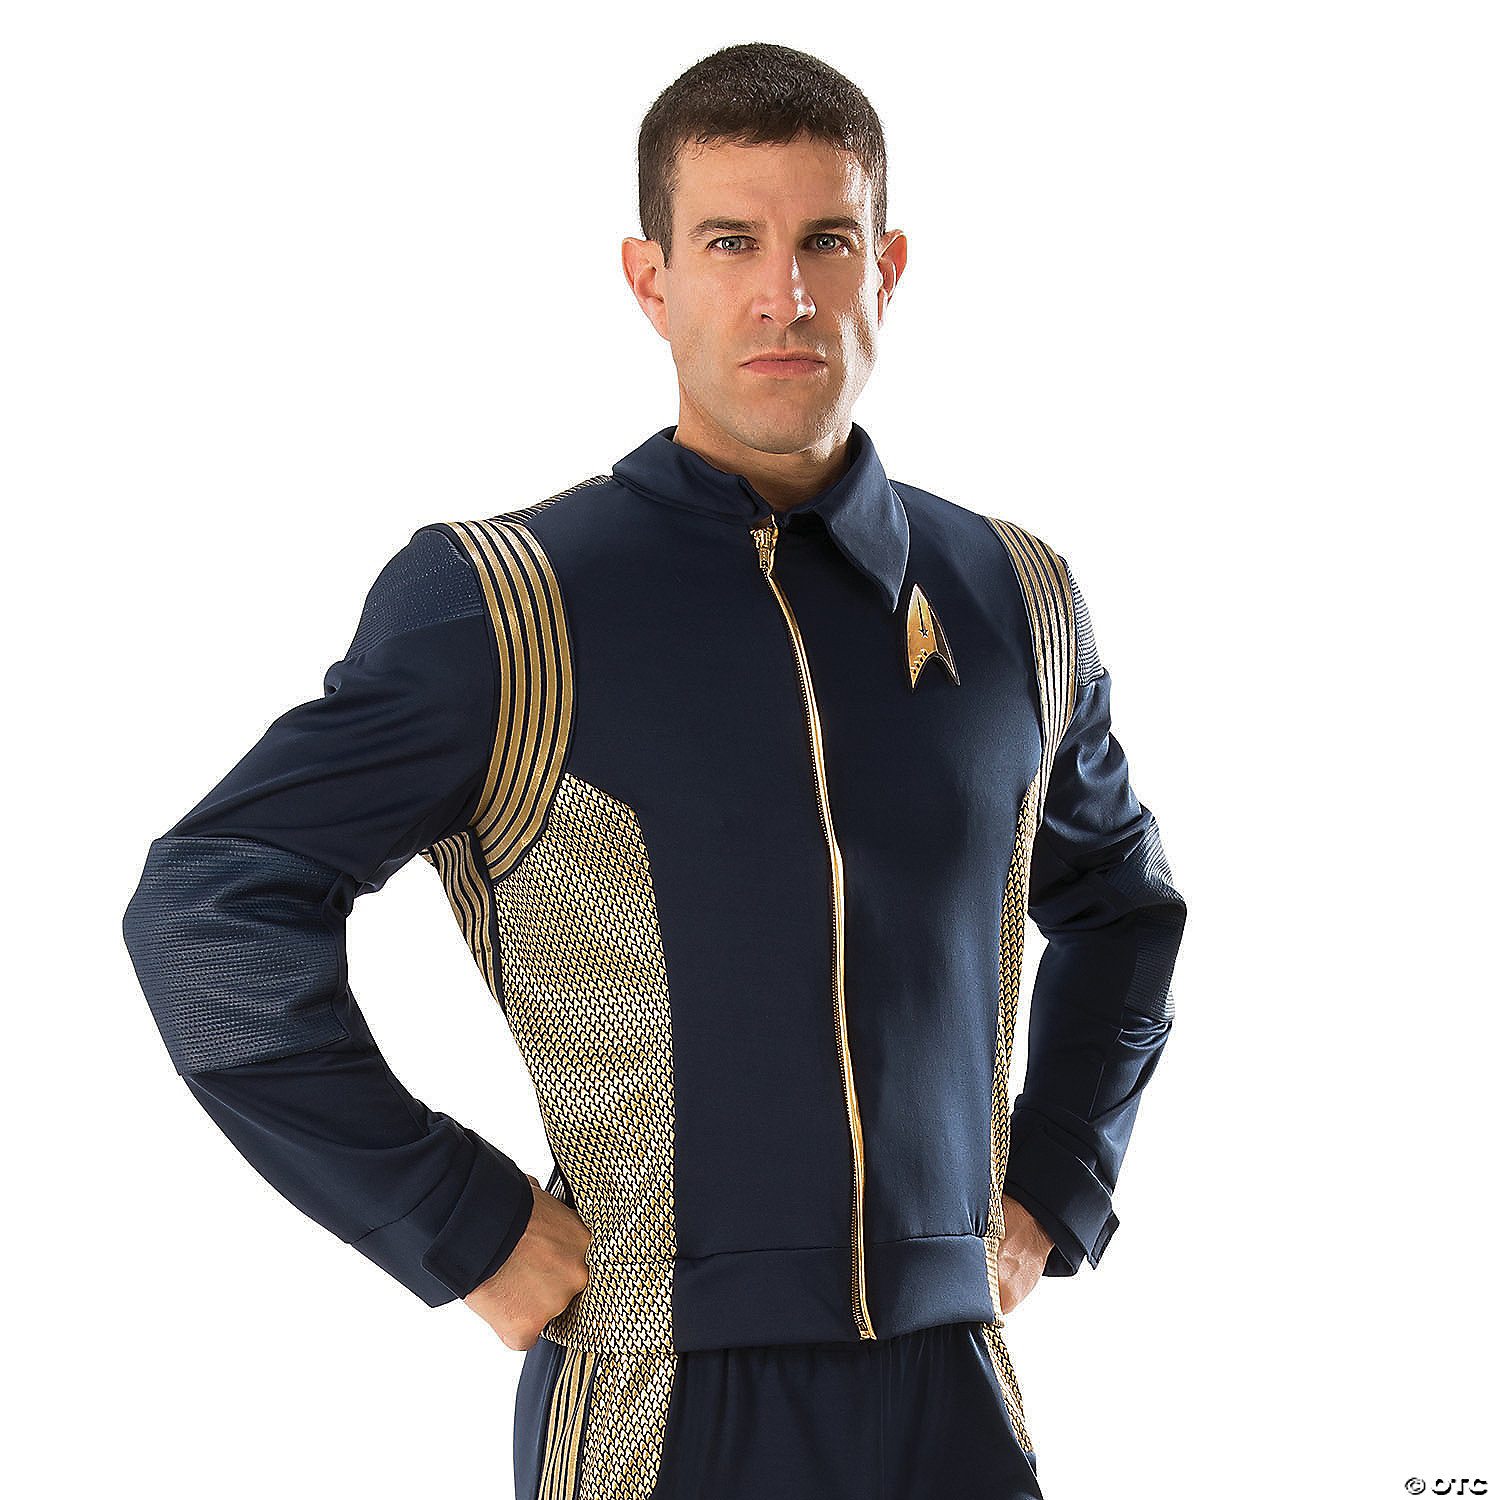 Cosplay Discovery Season 2 Starfleet Commander Female Gold Dress Uniform Badge 